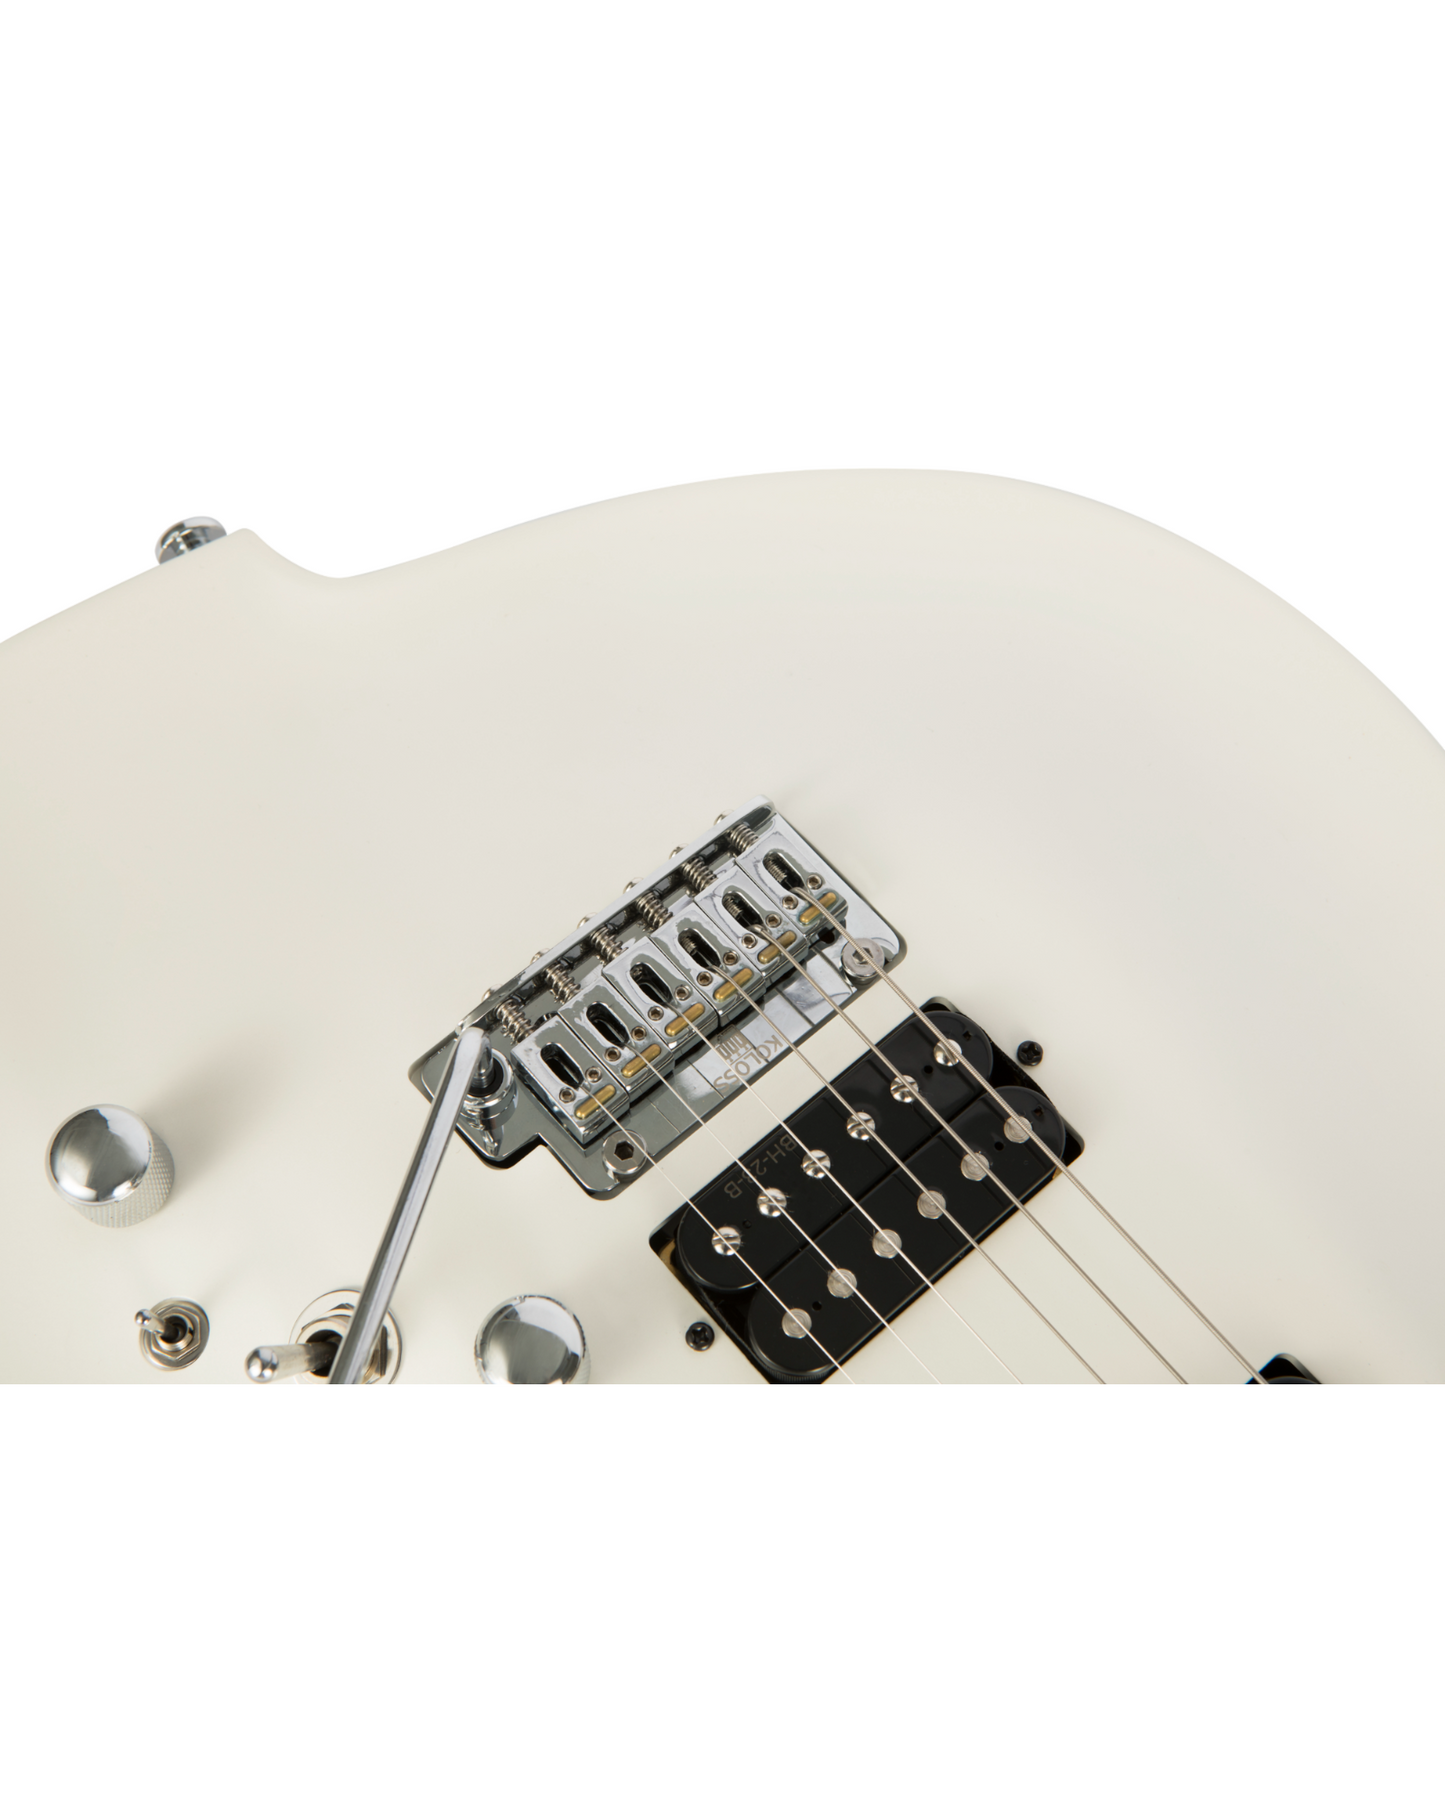 KOLOSS GT45P Aluminum Body Roasted Maple Neck Electric Guitar + Bag